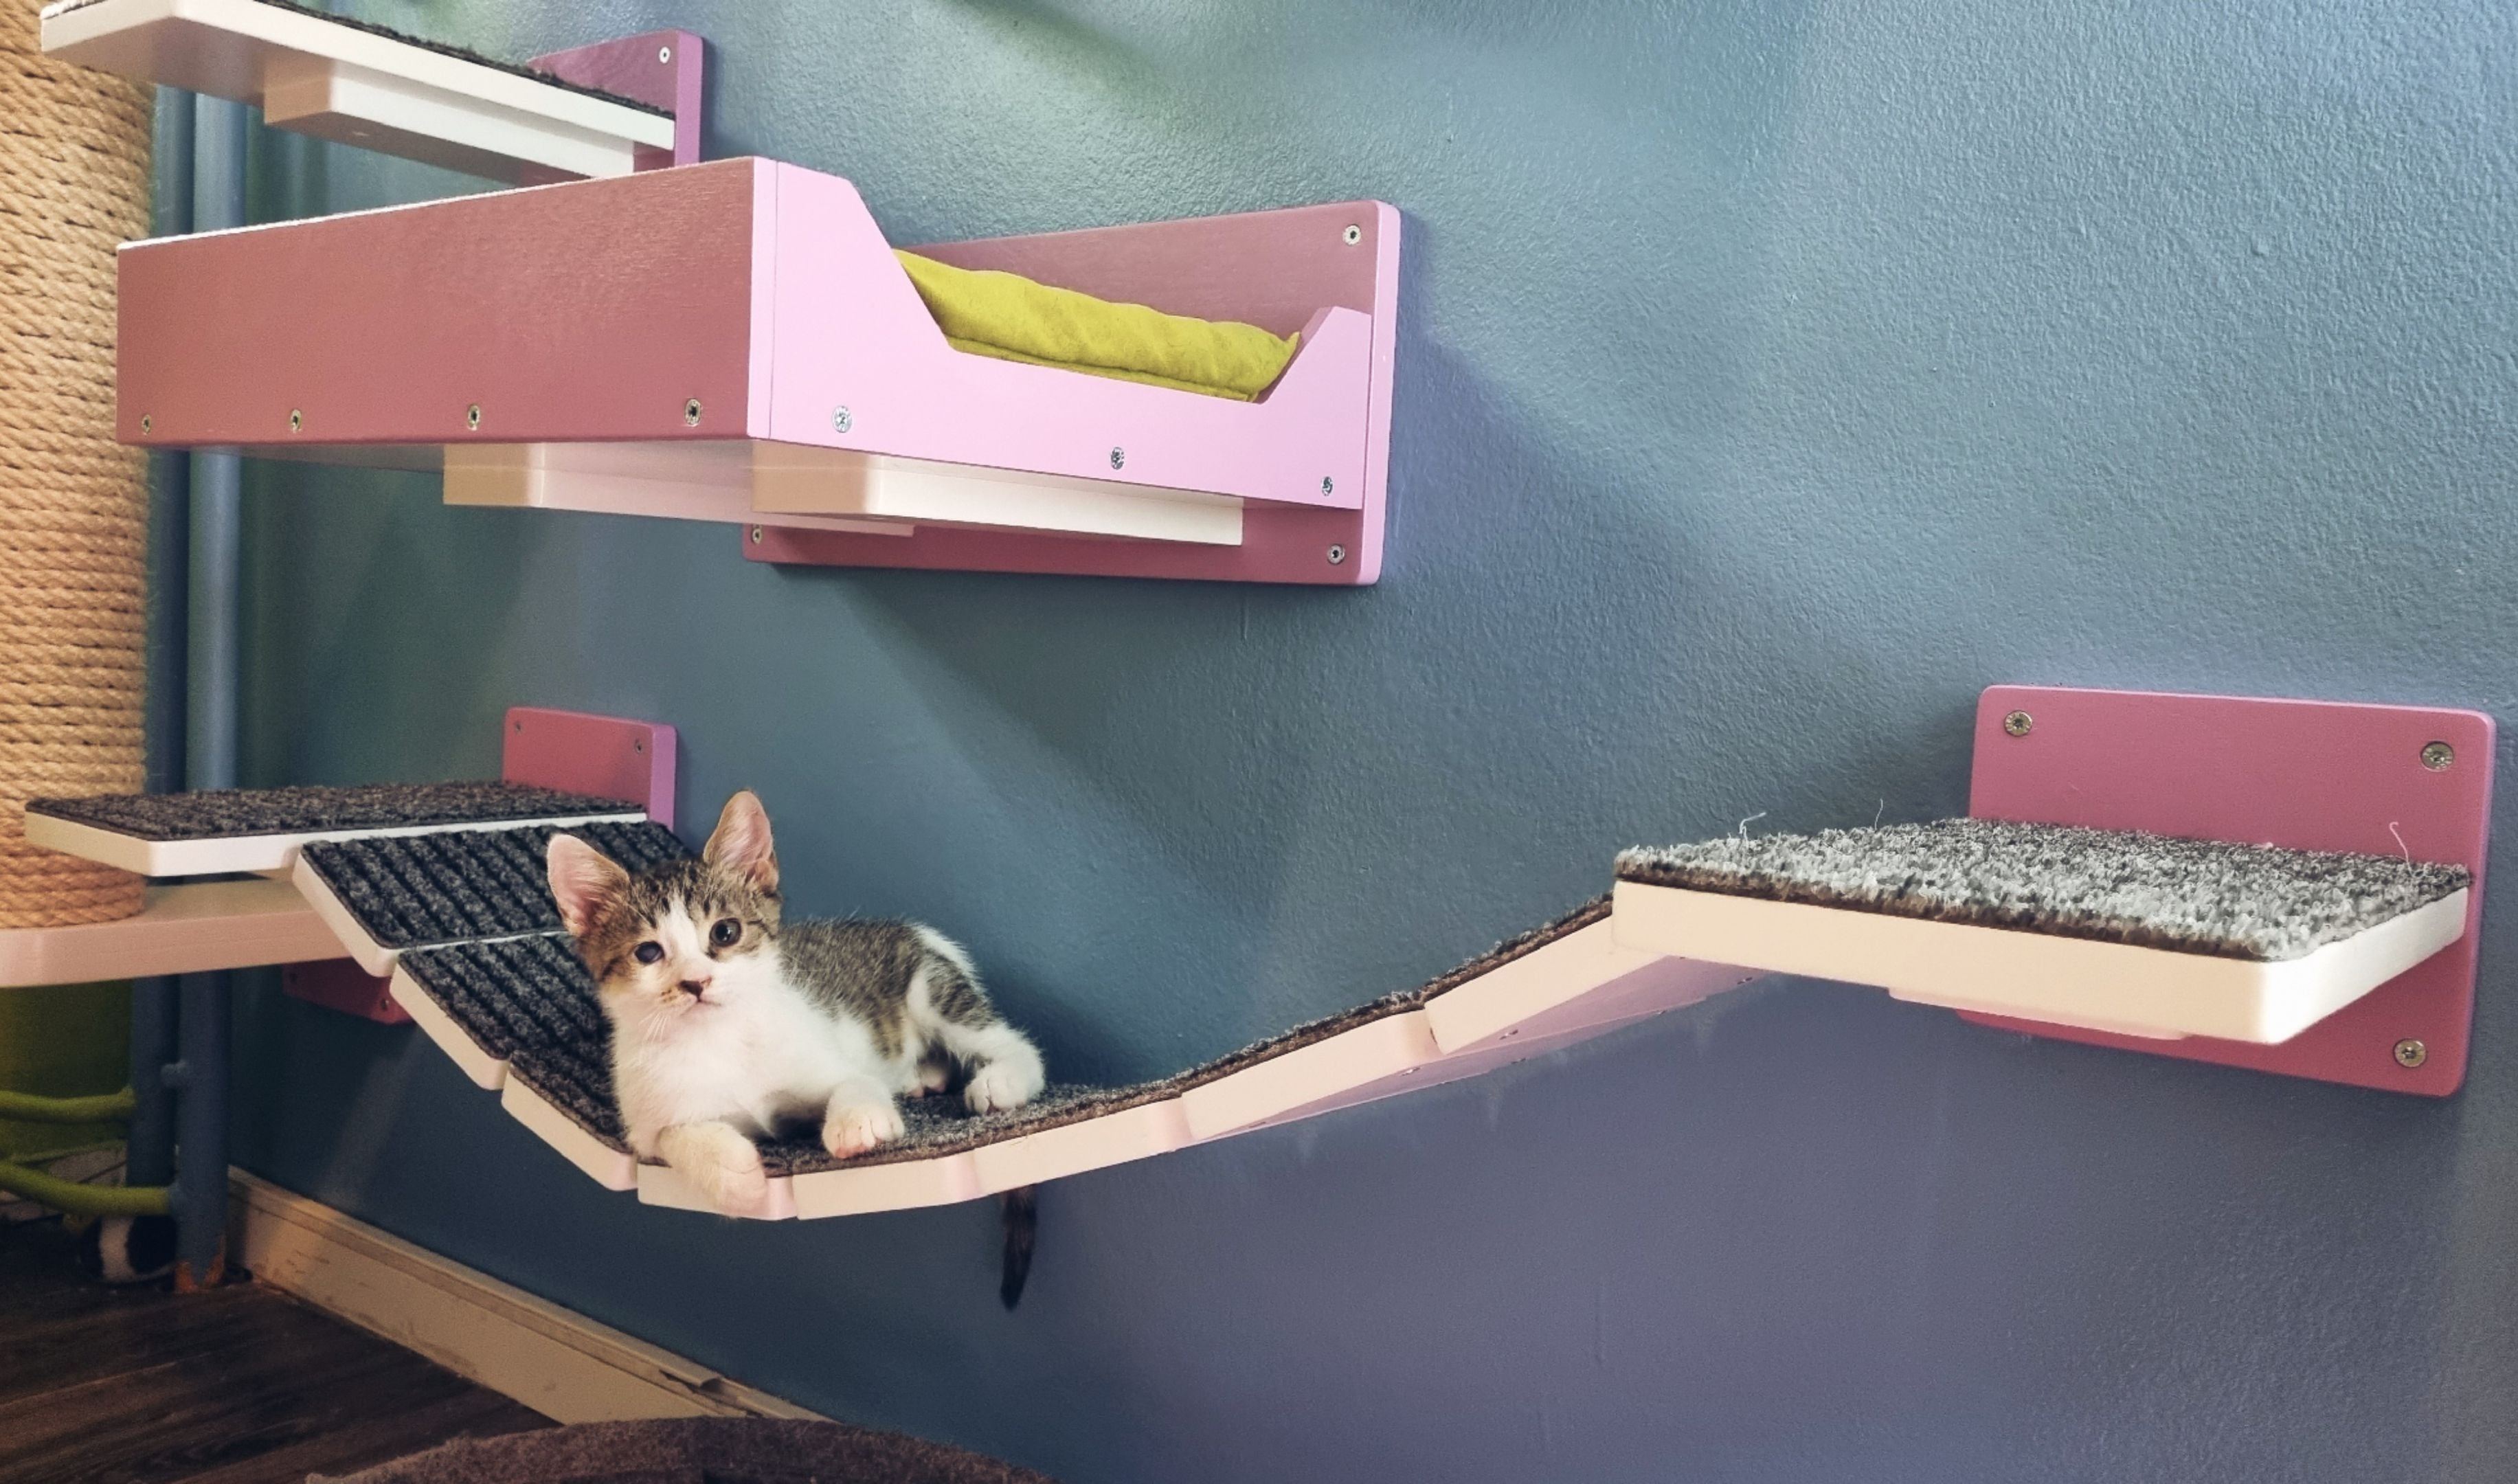 Cat Bridge Shelf Step Wide - Wally WideBridge (1Step - 1Step mount) - Scratchy Things Premium Pet Furniture